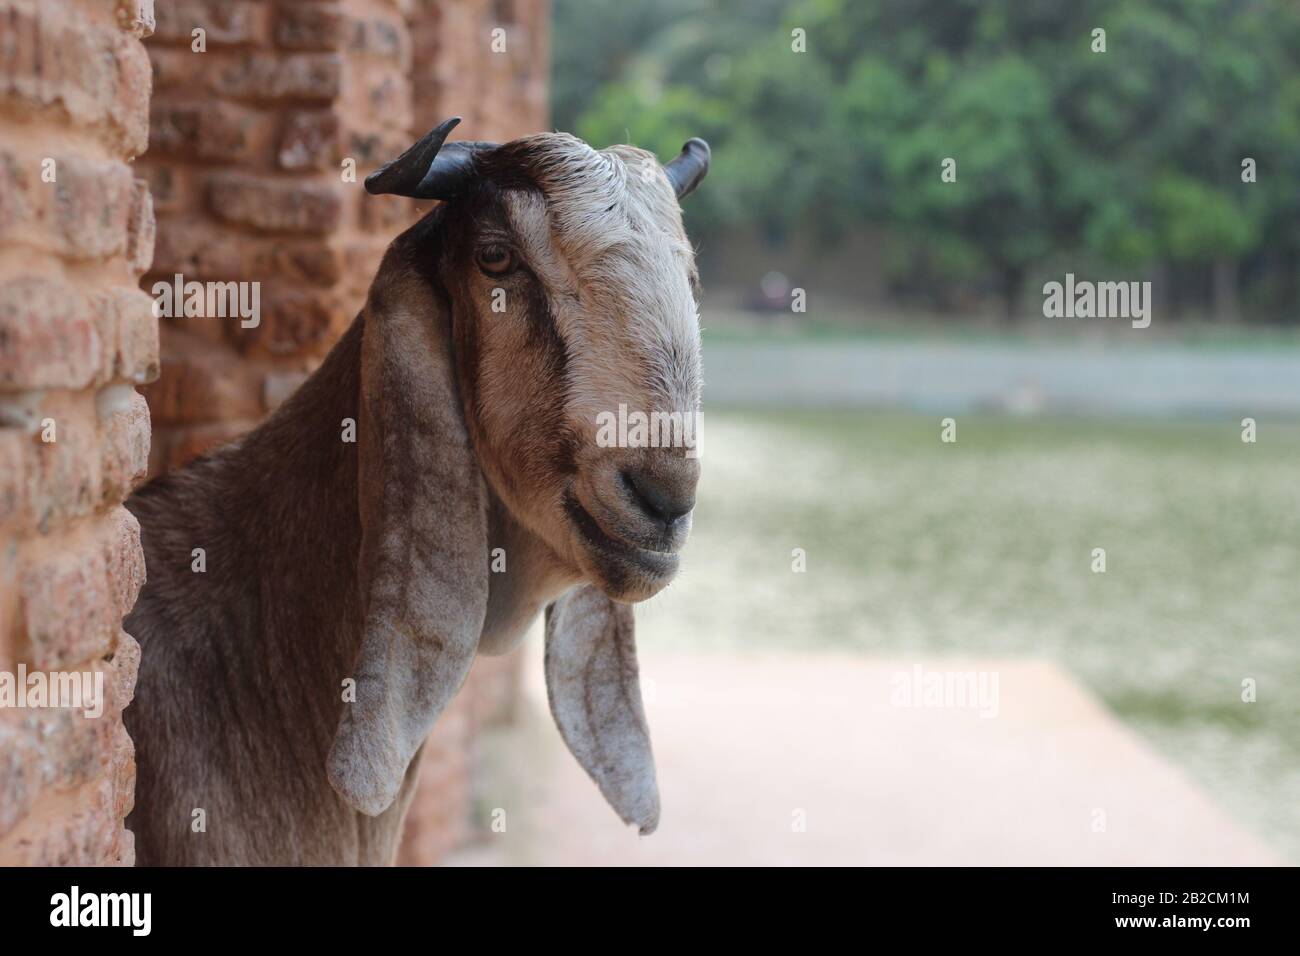 Goat its a pet animal Stock Photo